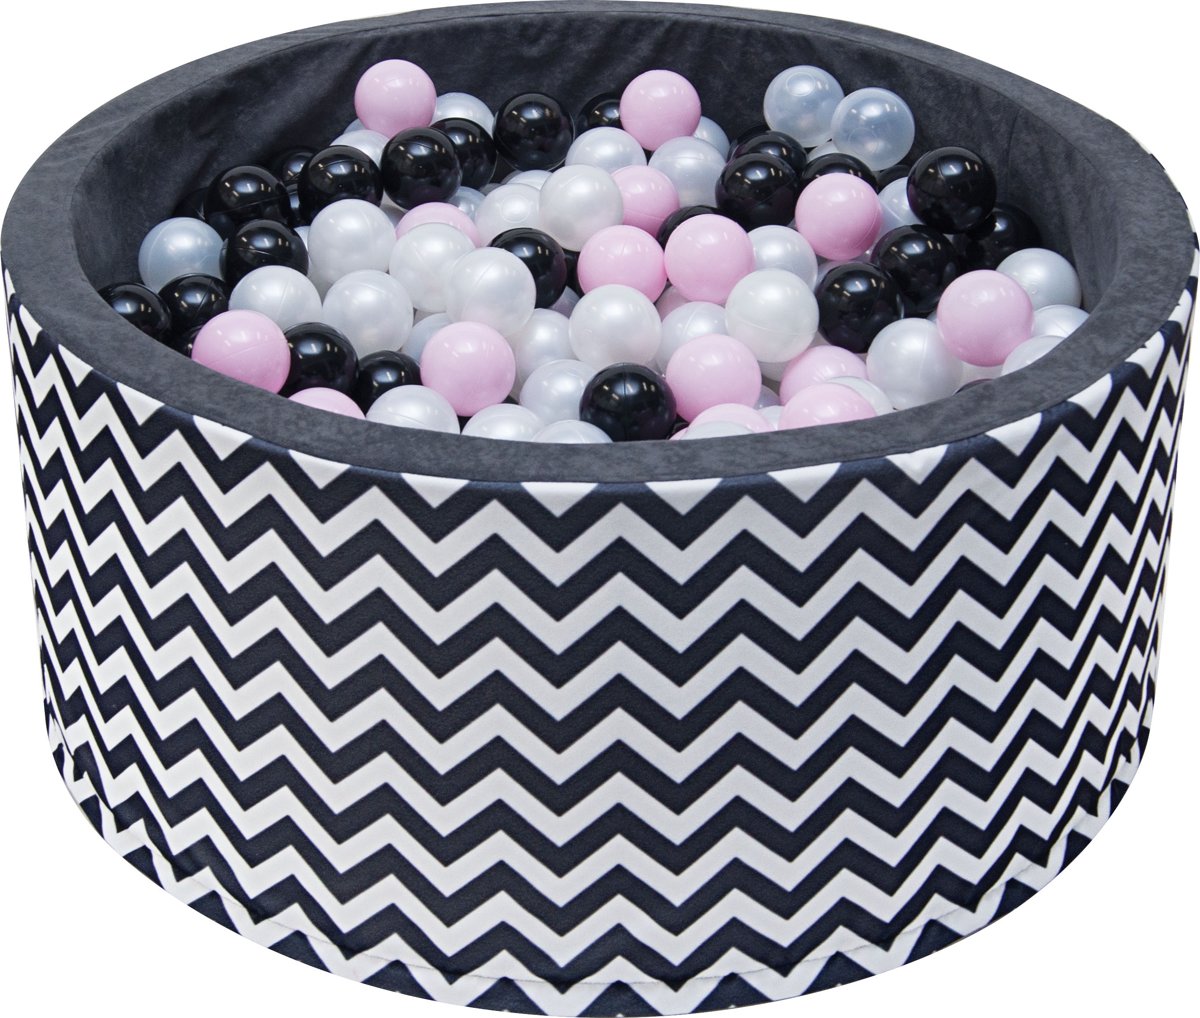 Ballenbak | Wit en zwarte strepen incl.  200 witte, zwarte, grijze en roze ballen